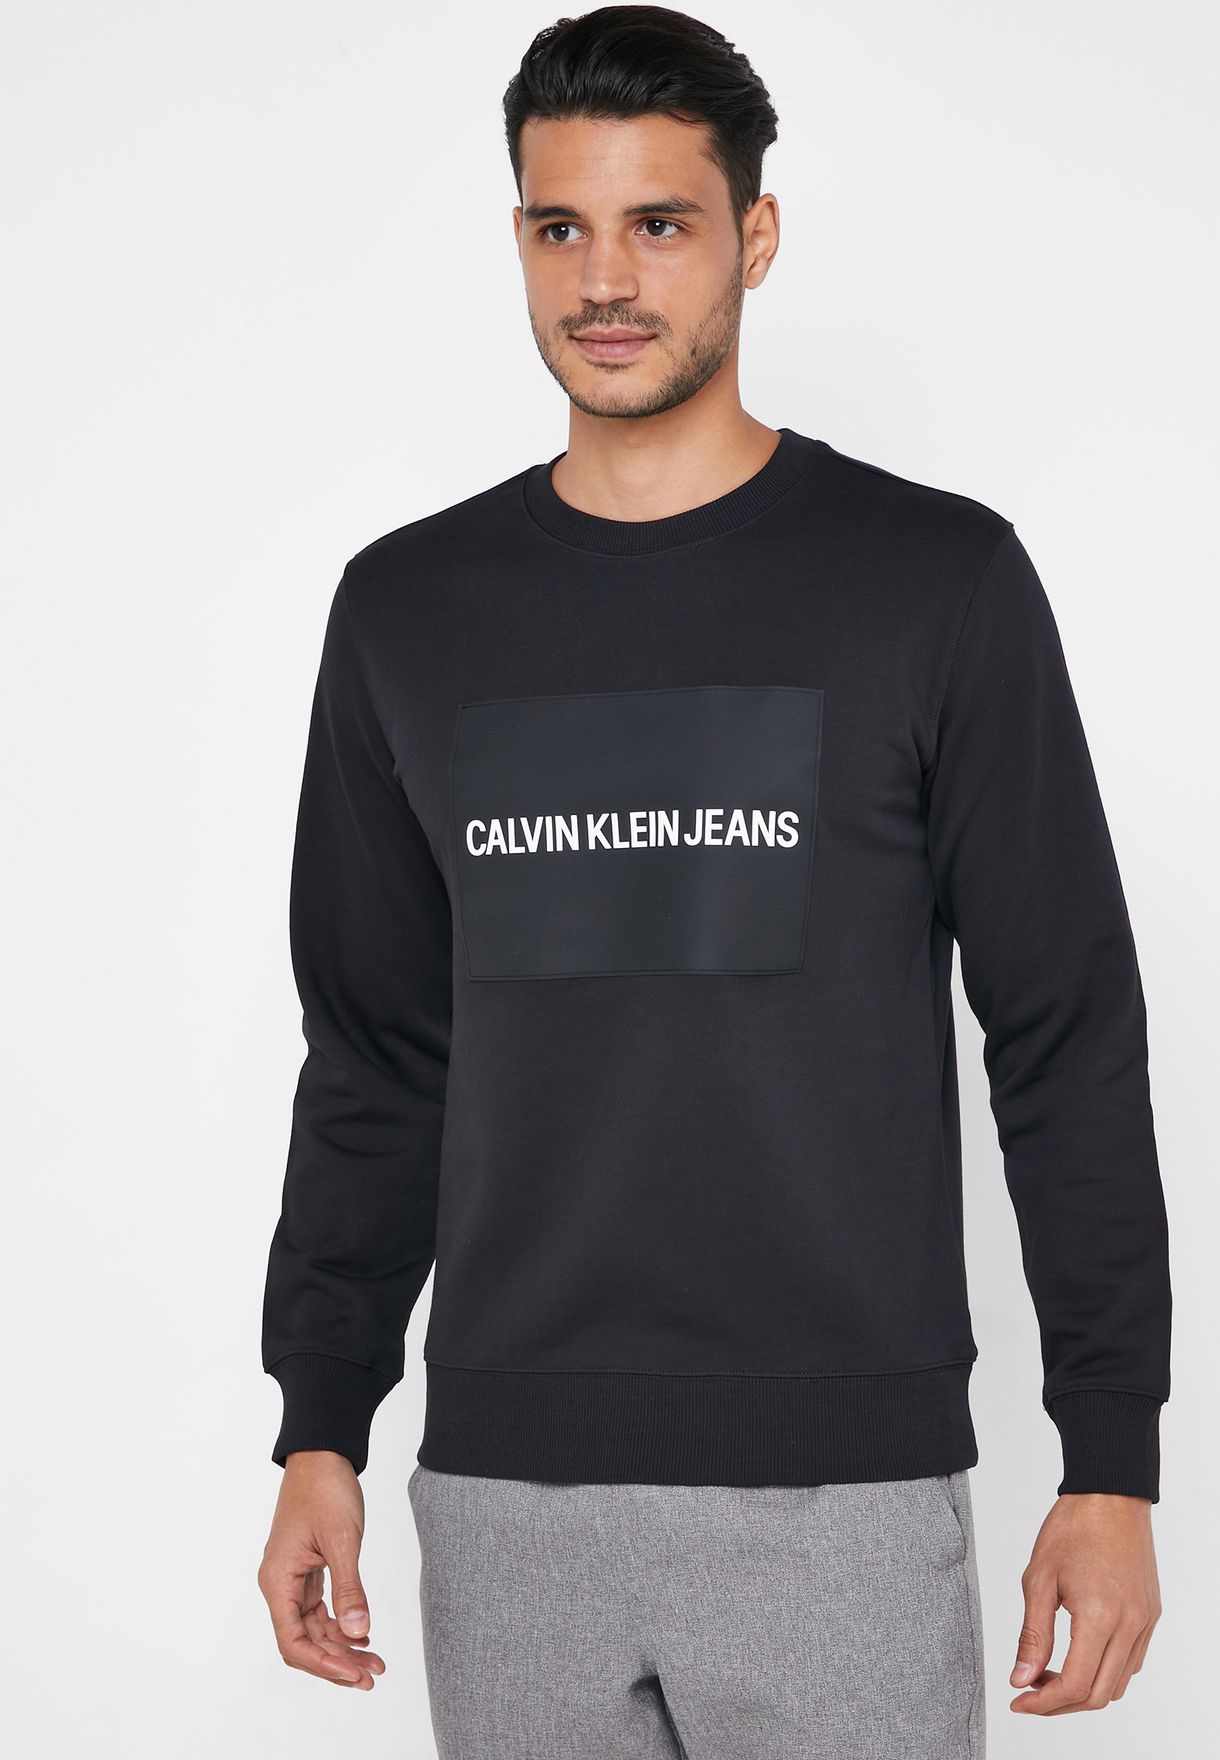 cheap calvin klein sweatshirt